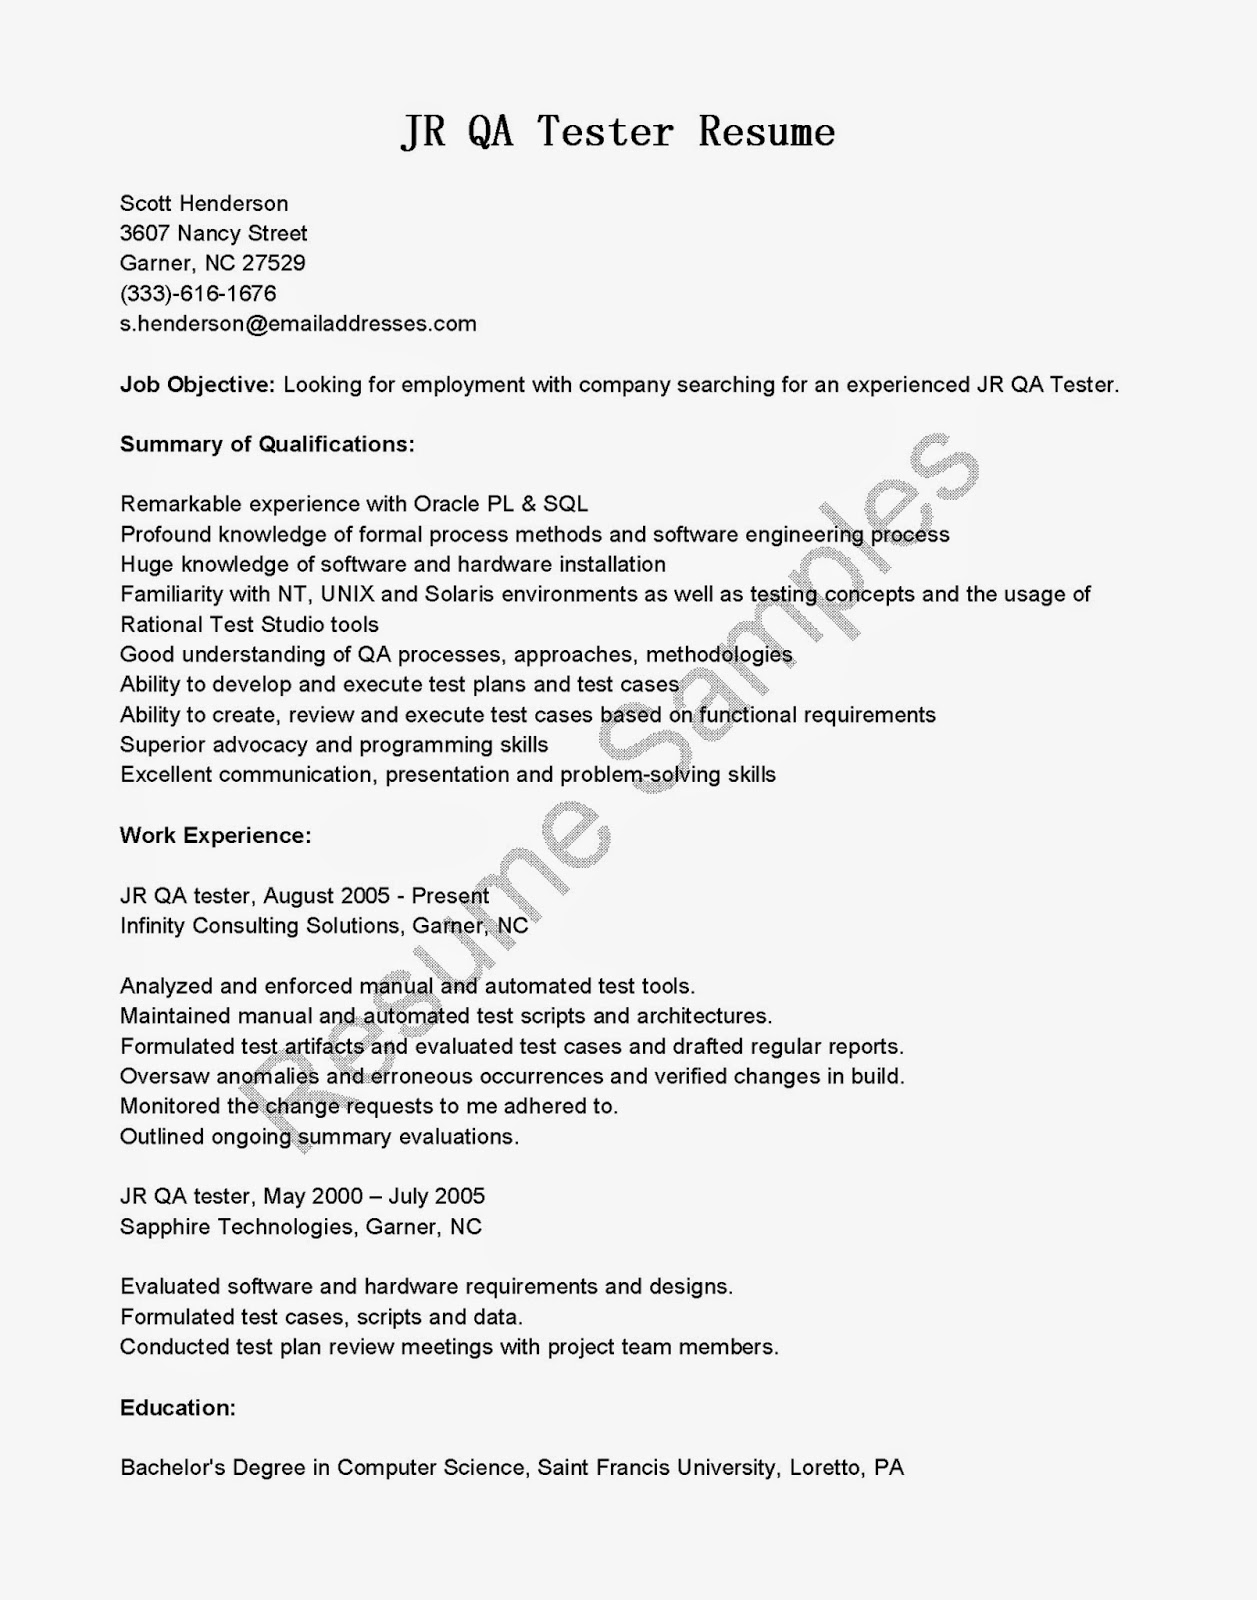 Sample resume for manual test engineer